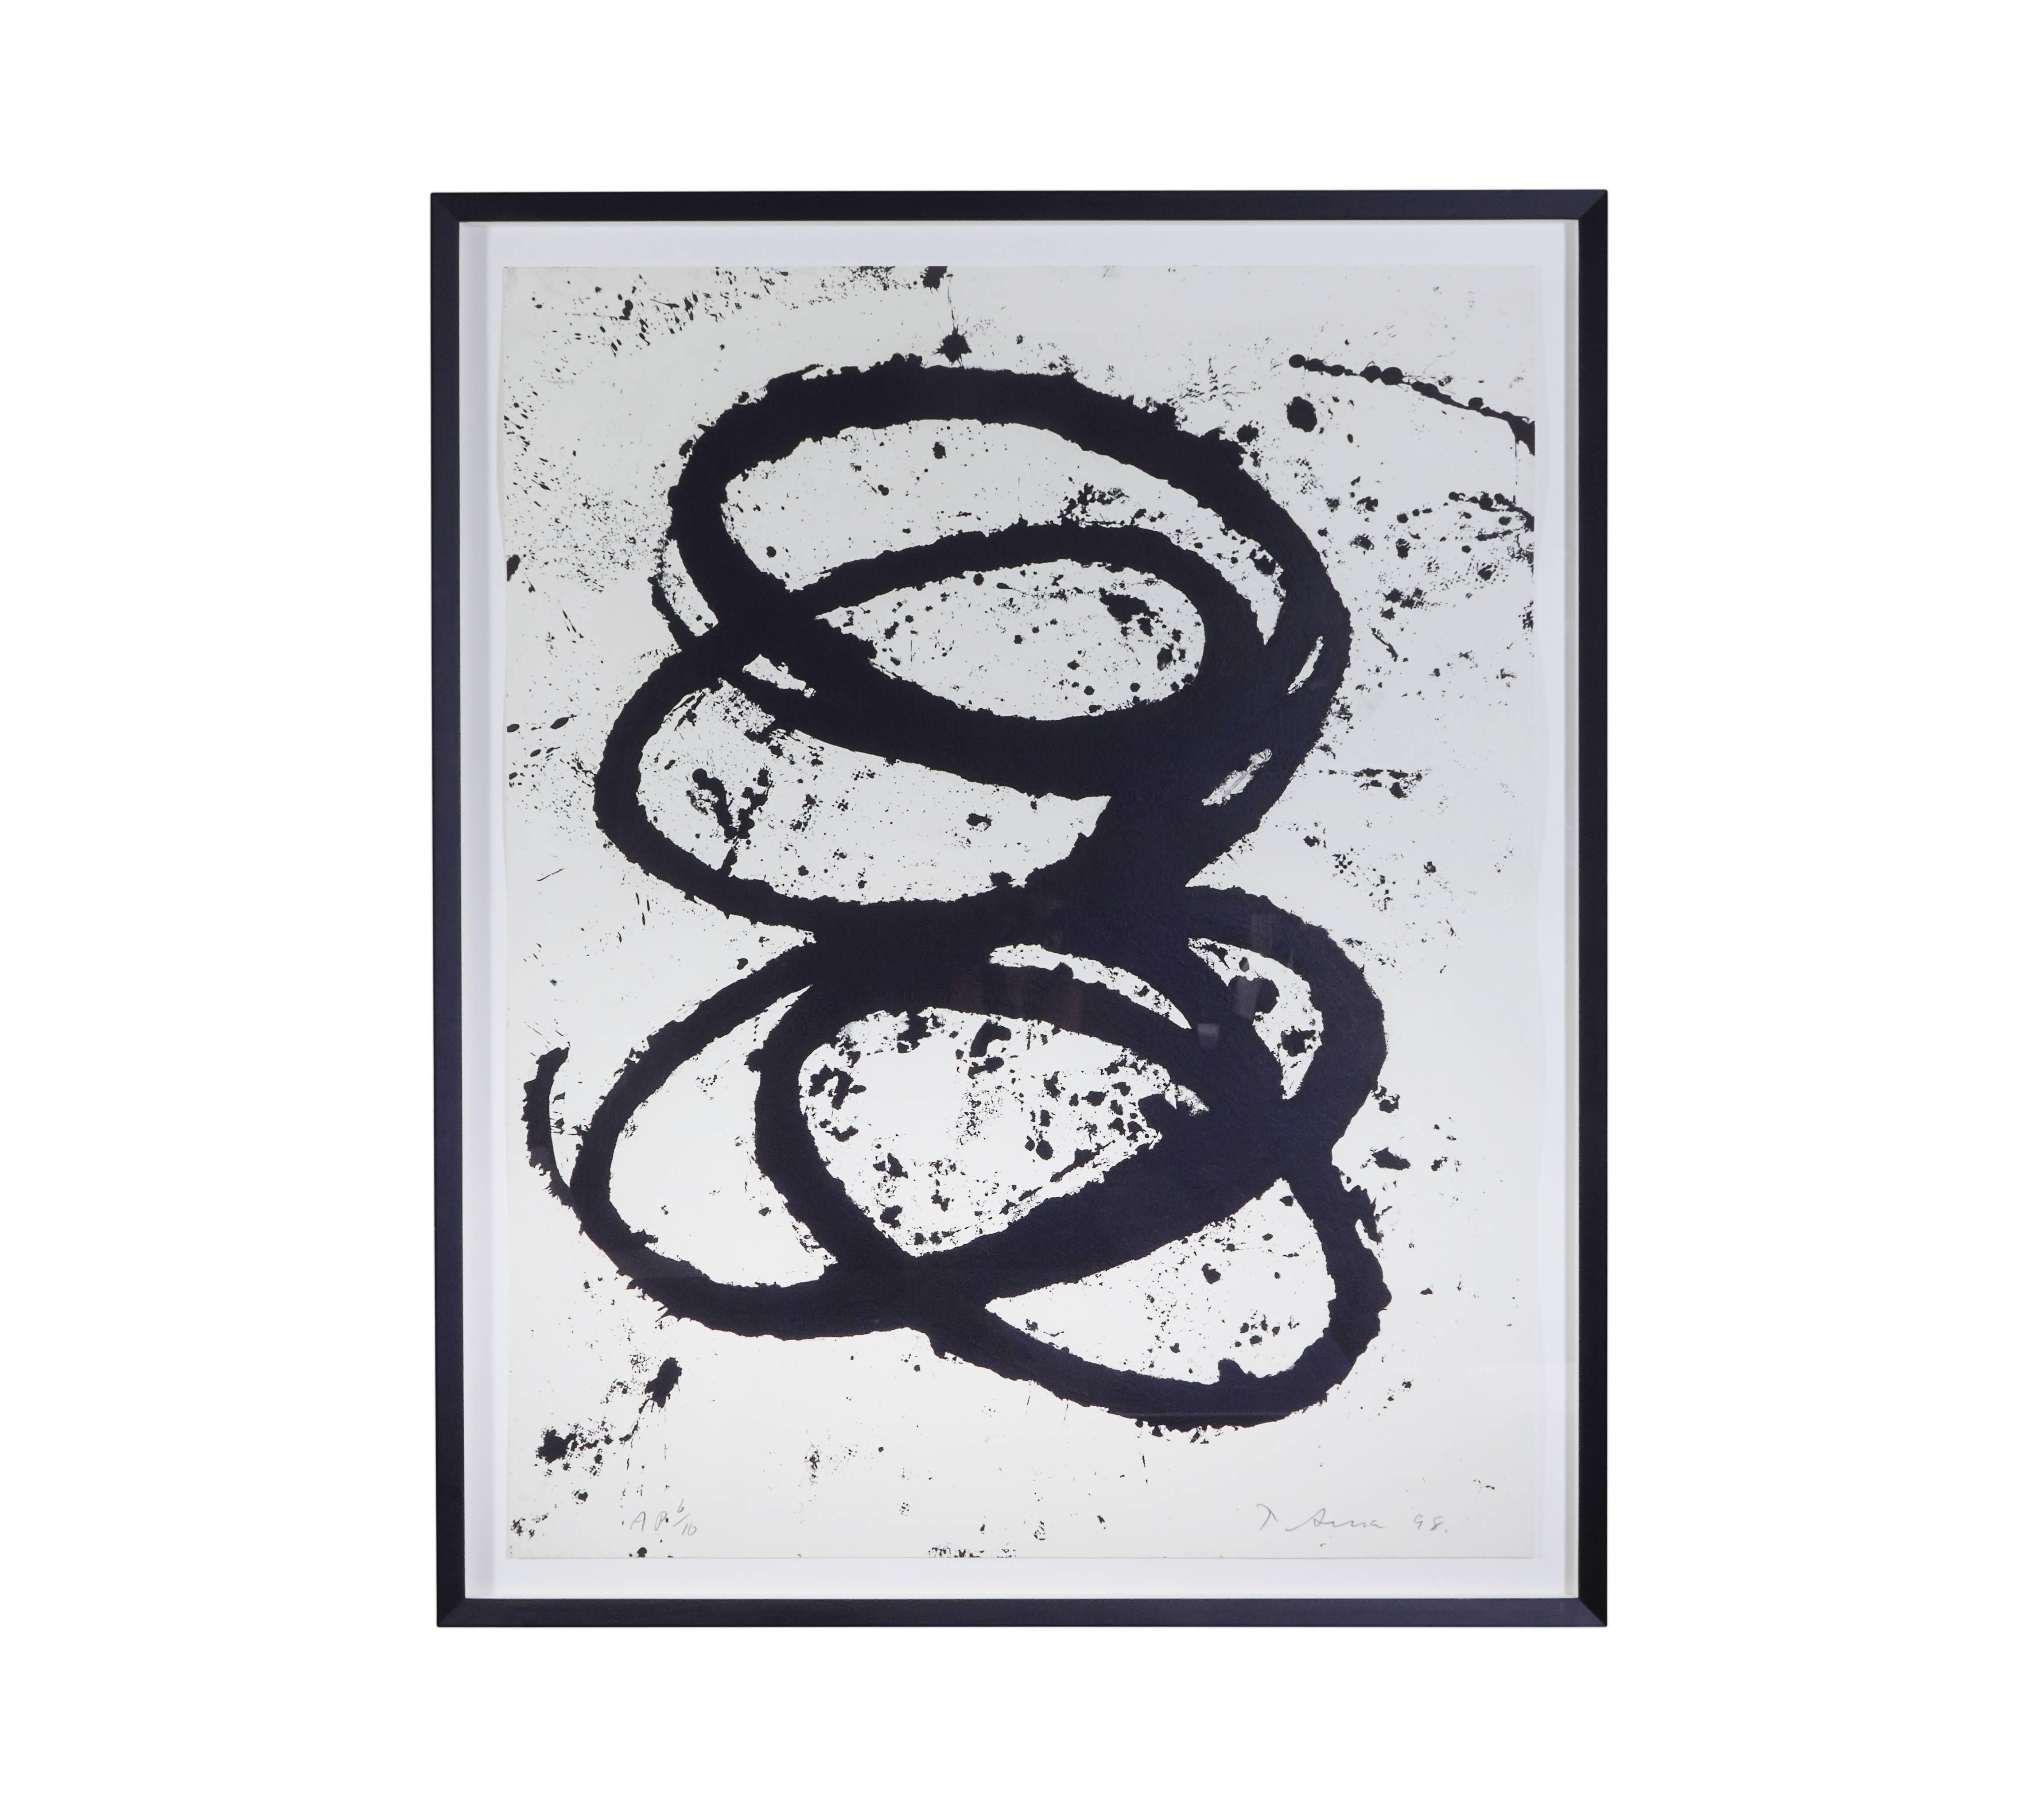 Richard Serra Abstract Print - T.E. Sparrow's Point